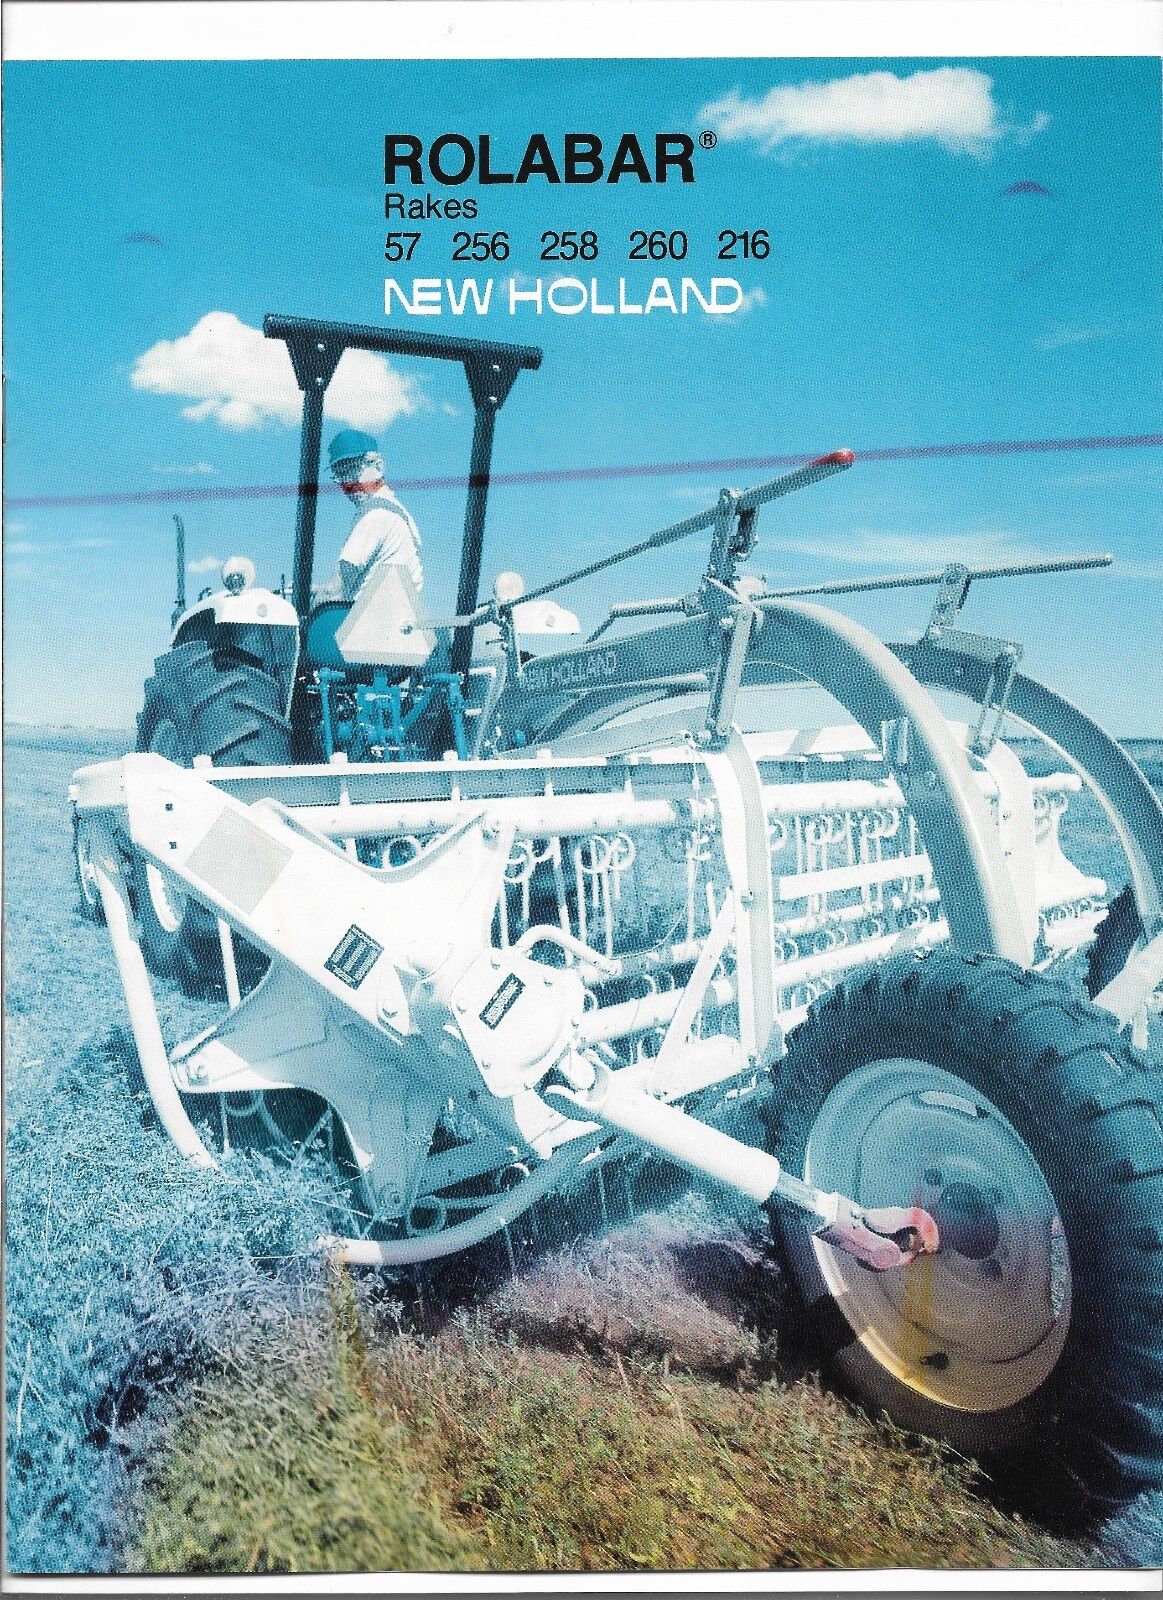 Original New Holland 57 256 258 260 216 Rolabar Rake Sales Brochure No. 31005754